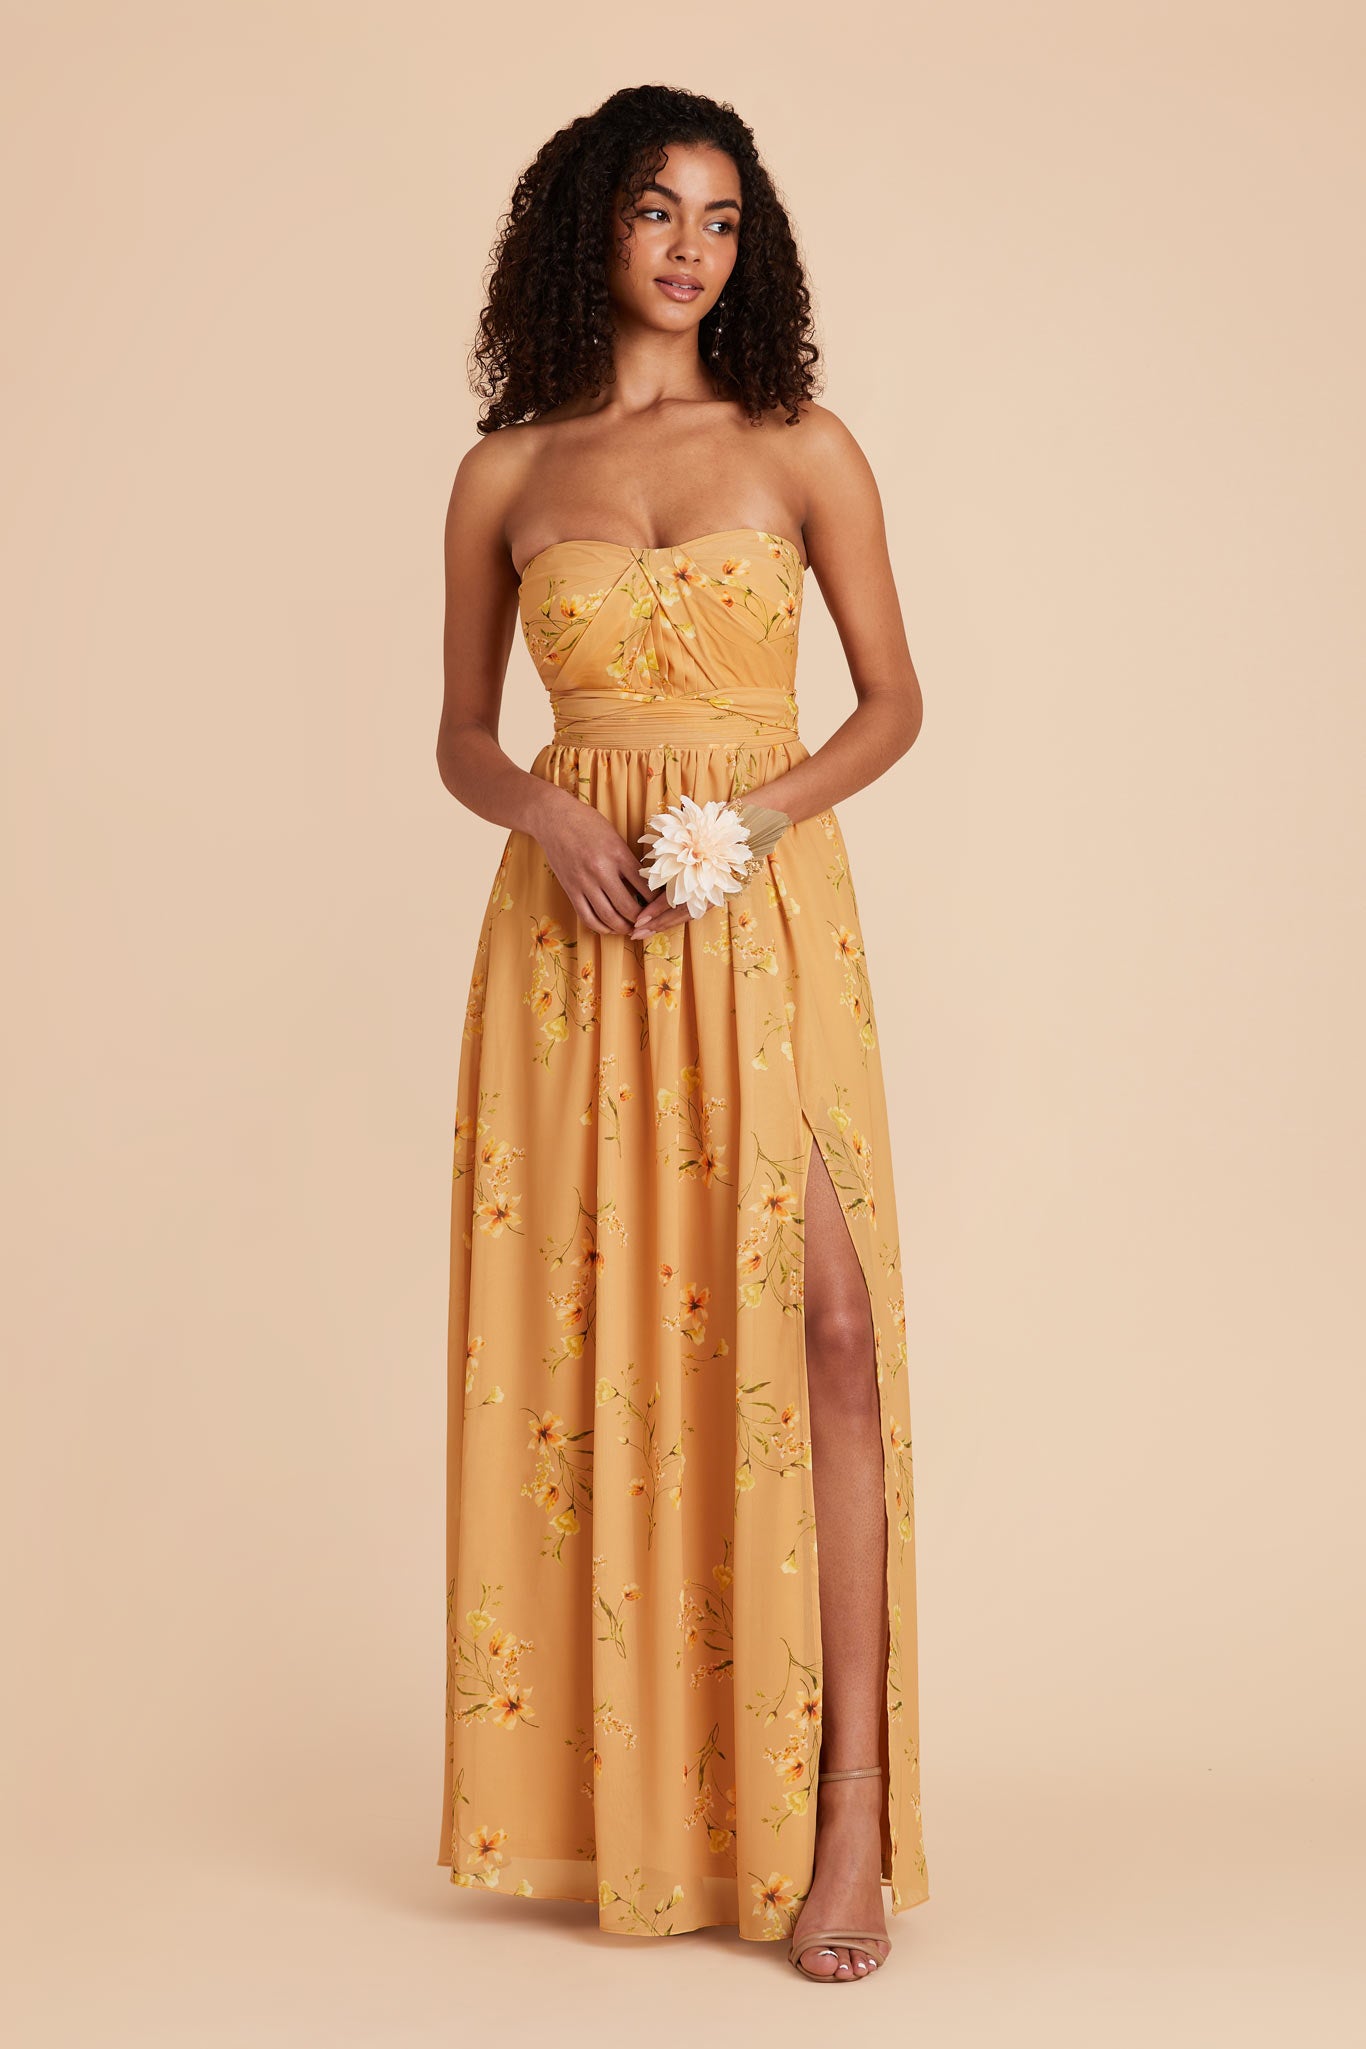 Marigold Le Fleur Grace Convertible Dress by Birdy Grey